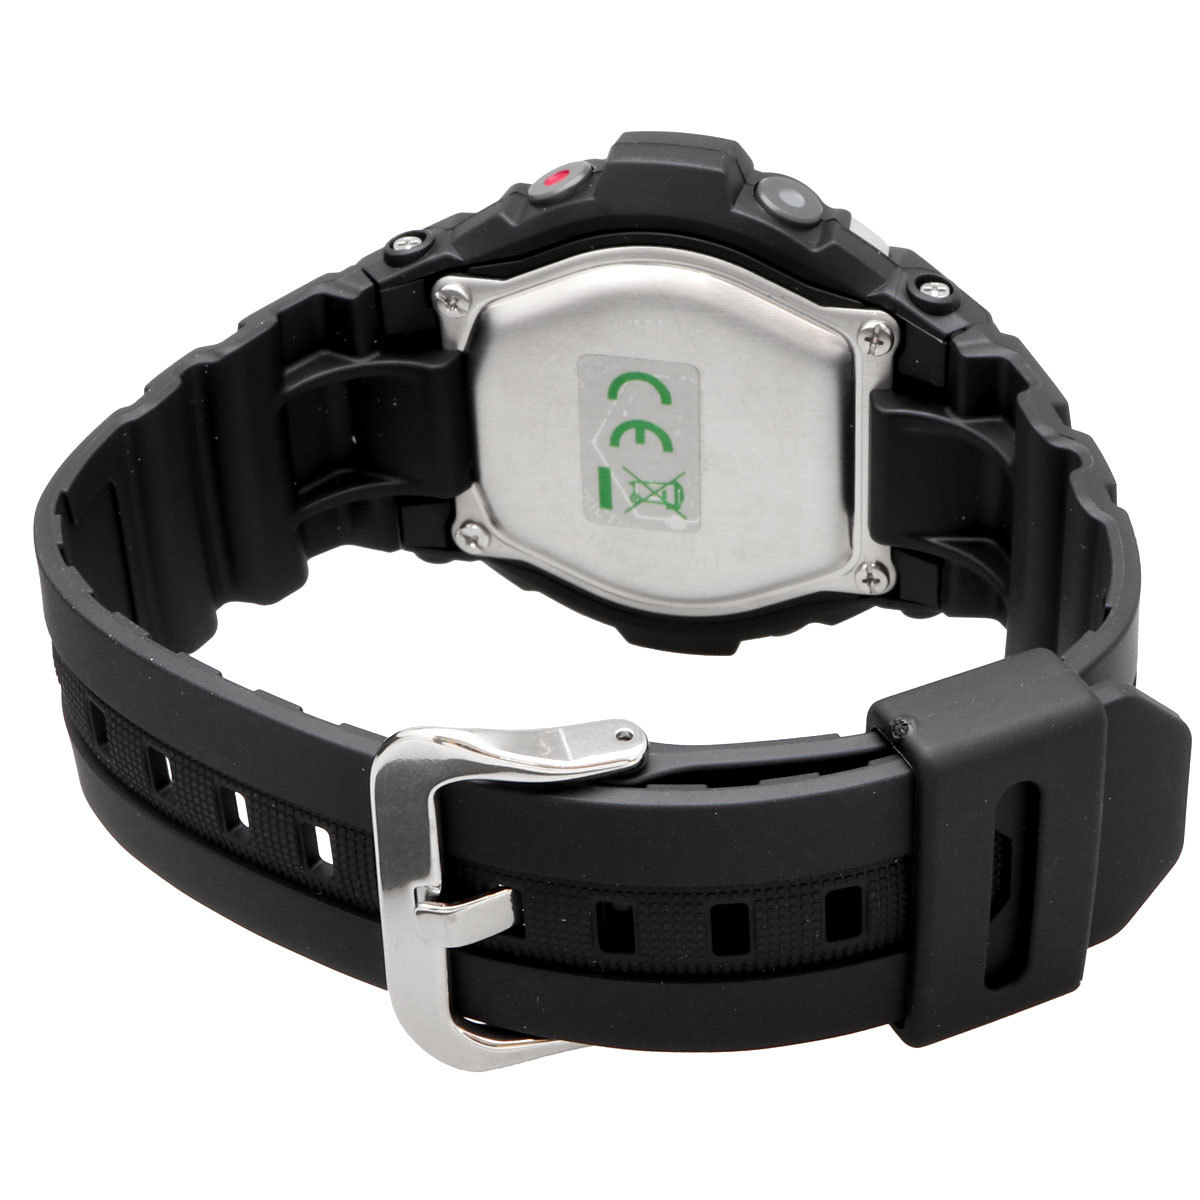  translation have special price![CASIO G-SHOCK]G-7700-1 rare new goods unused G-SPIKE digital men's black color black Casio G shock stopwatch wristwatch 